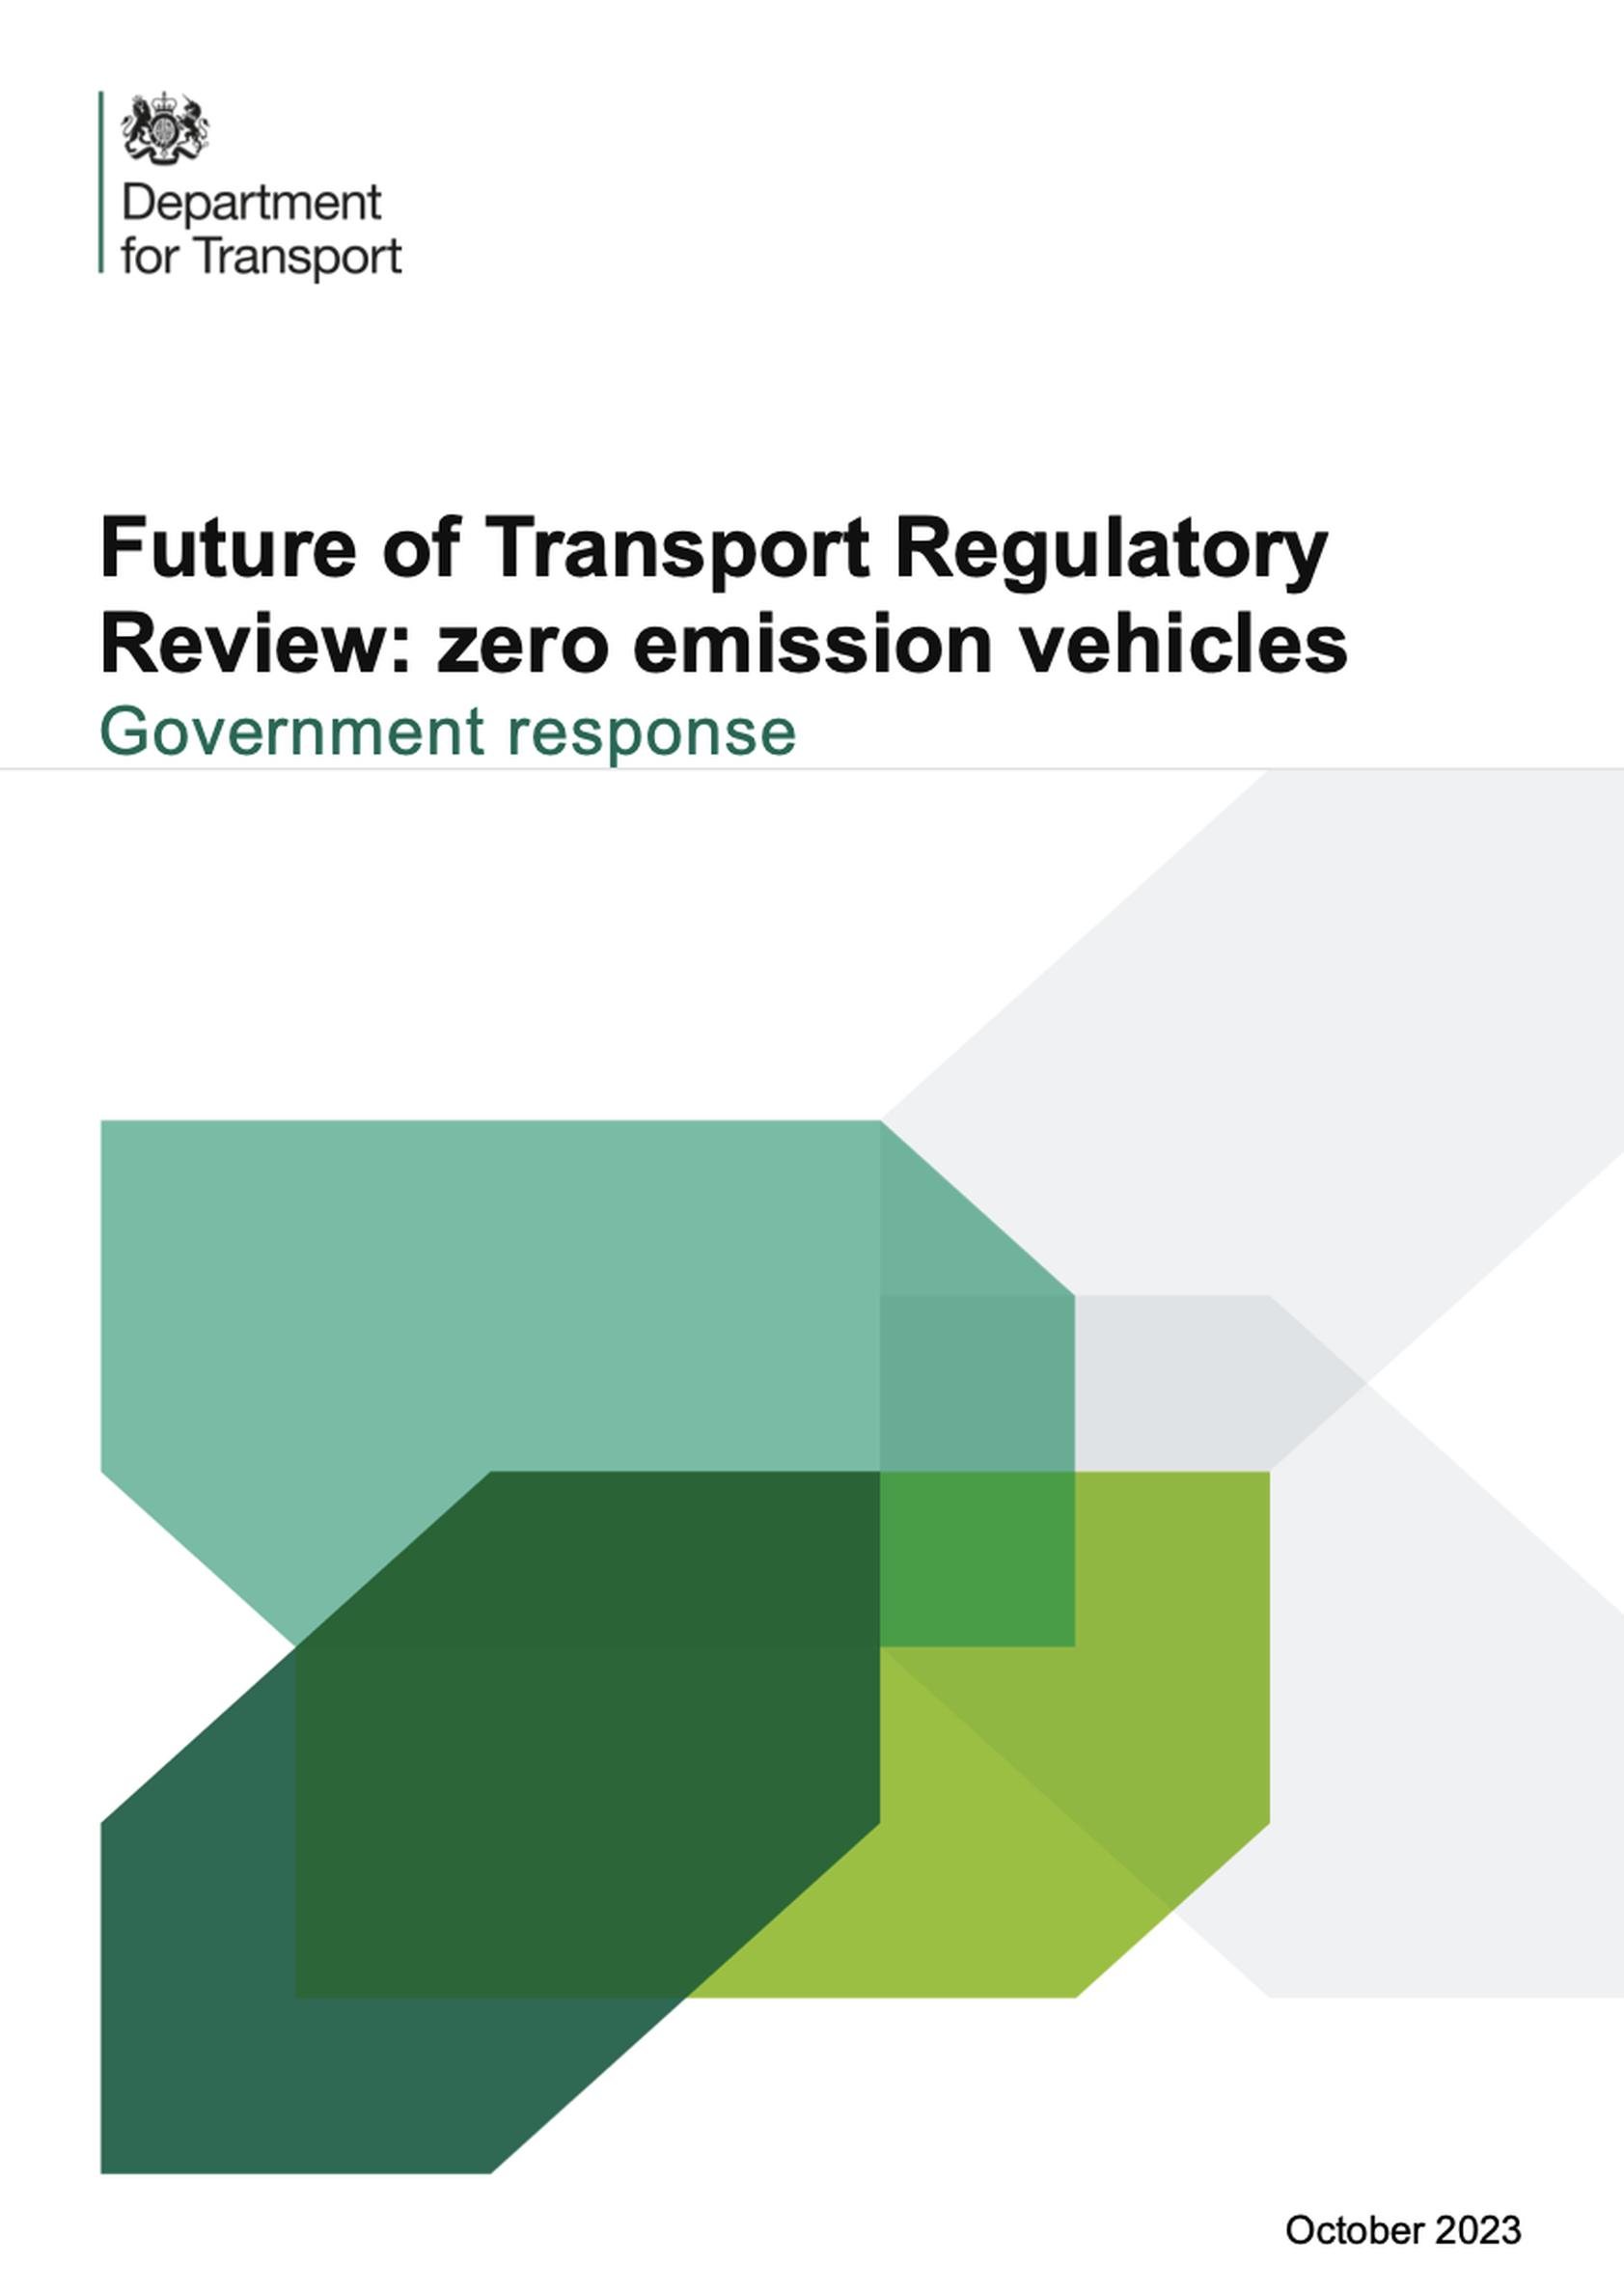 Future of Transport Regulatory Review: Zero-emission vehicles - Government Response